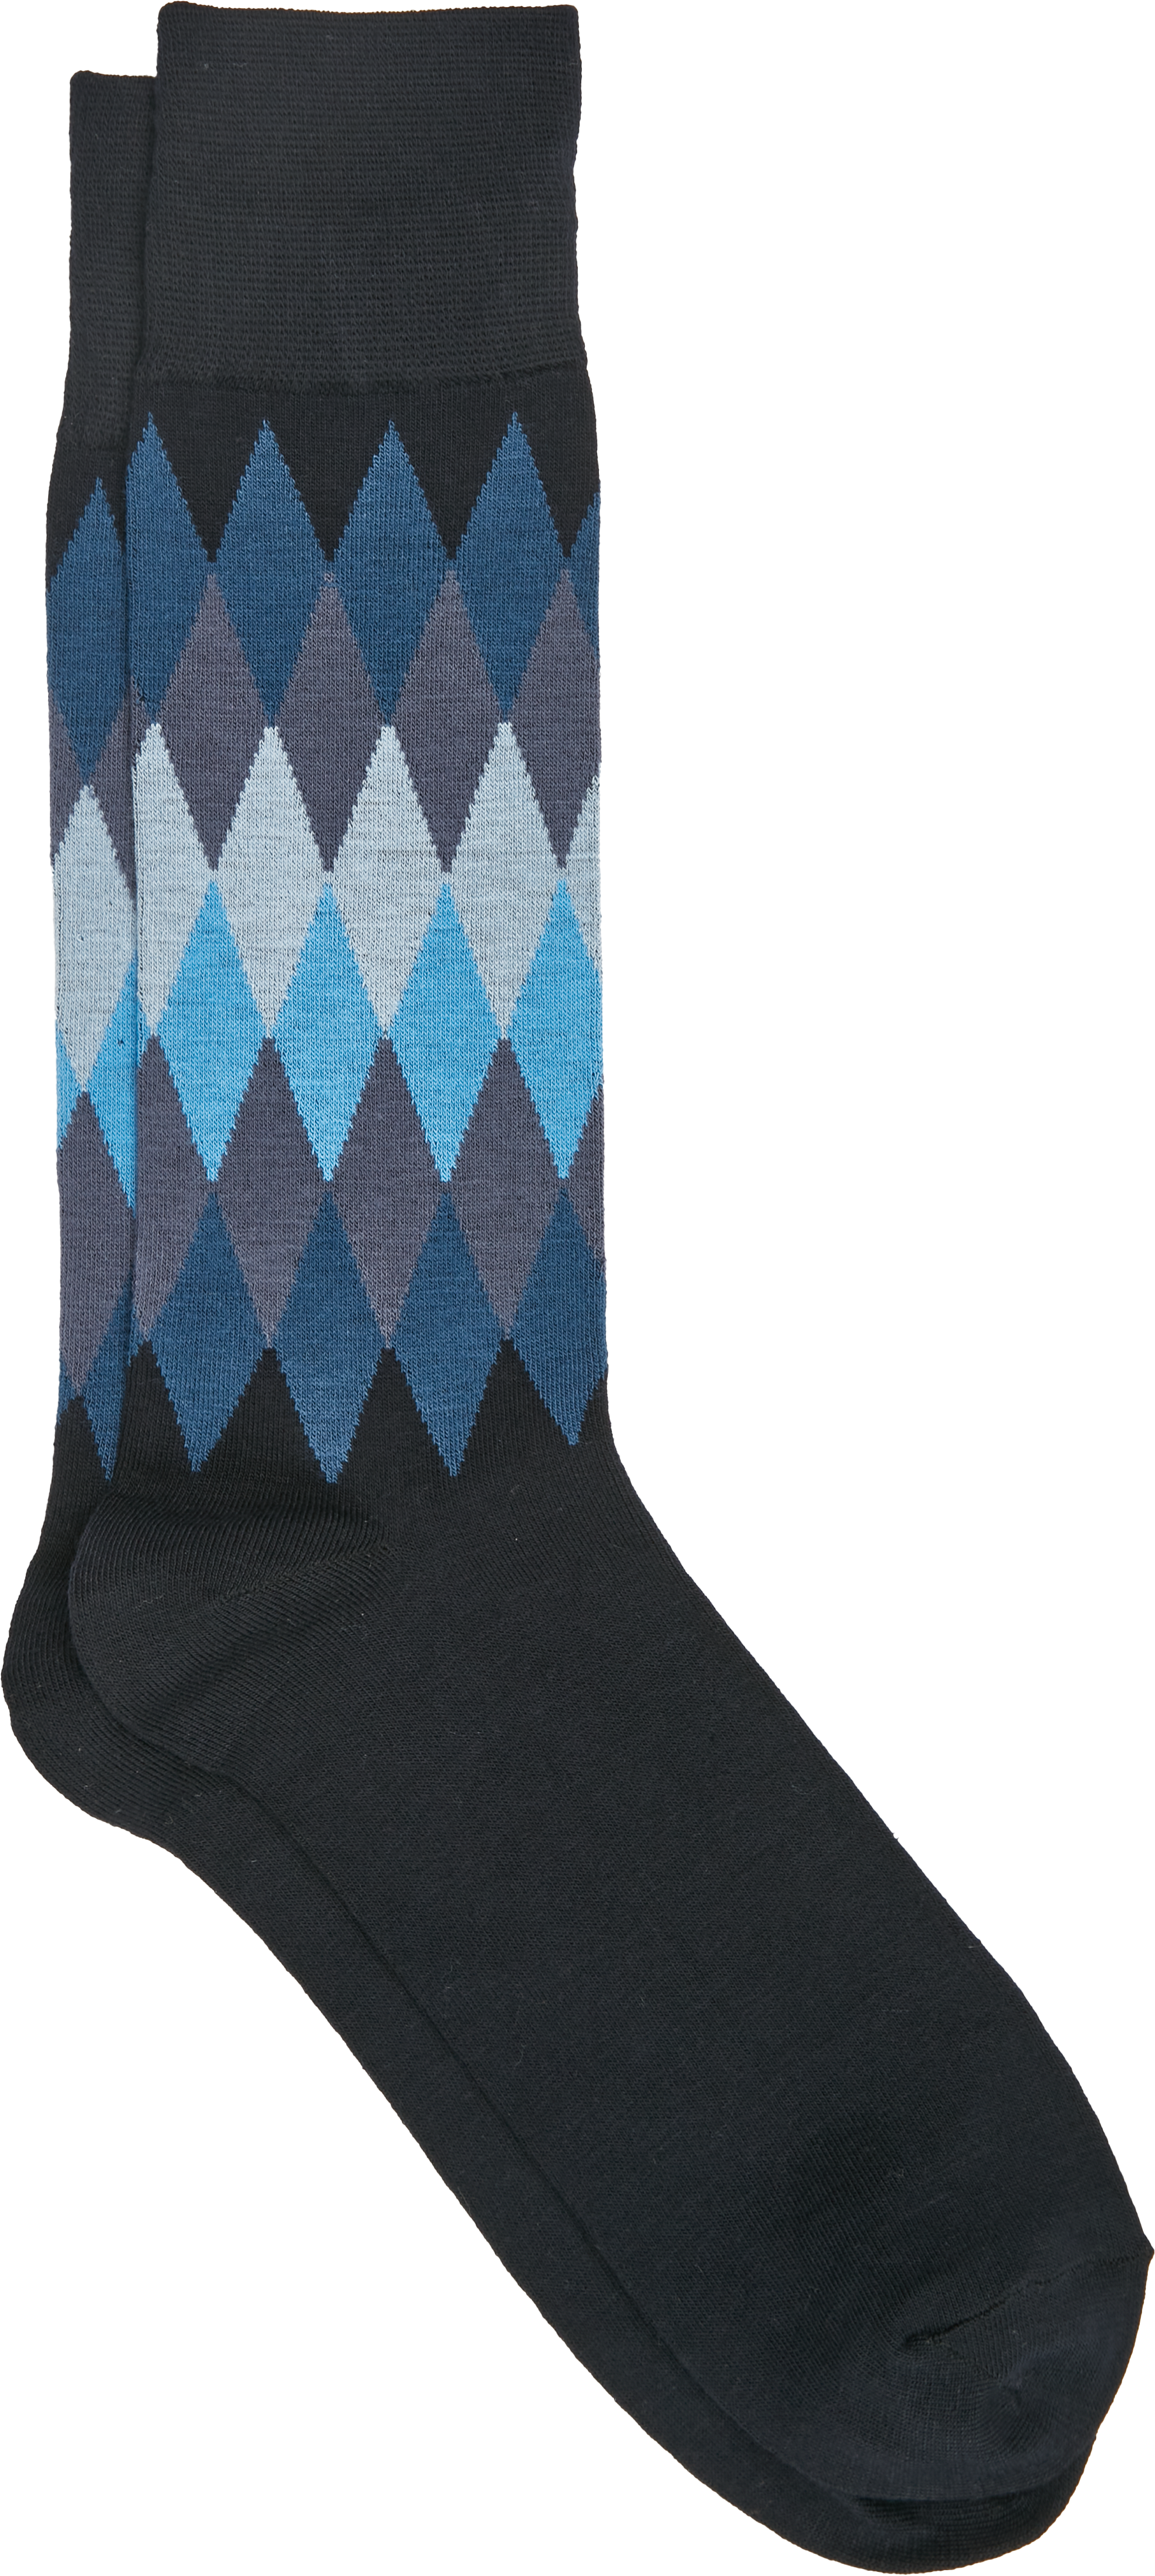 Pronto Uomo Socks, Blue Modern Argyle - Men's Brands | Men's Wearhouse